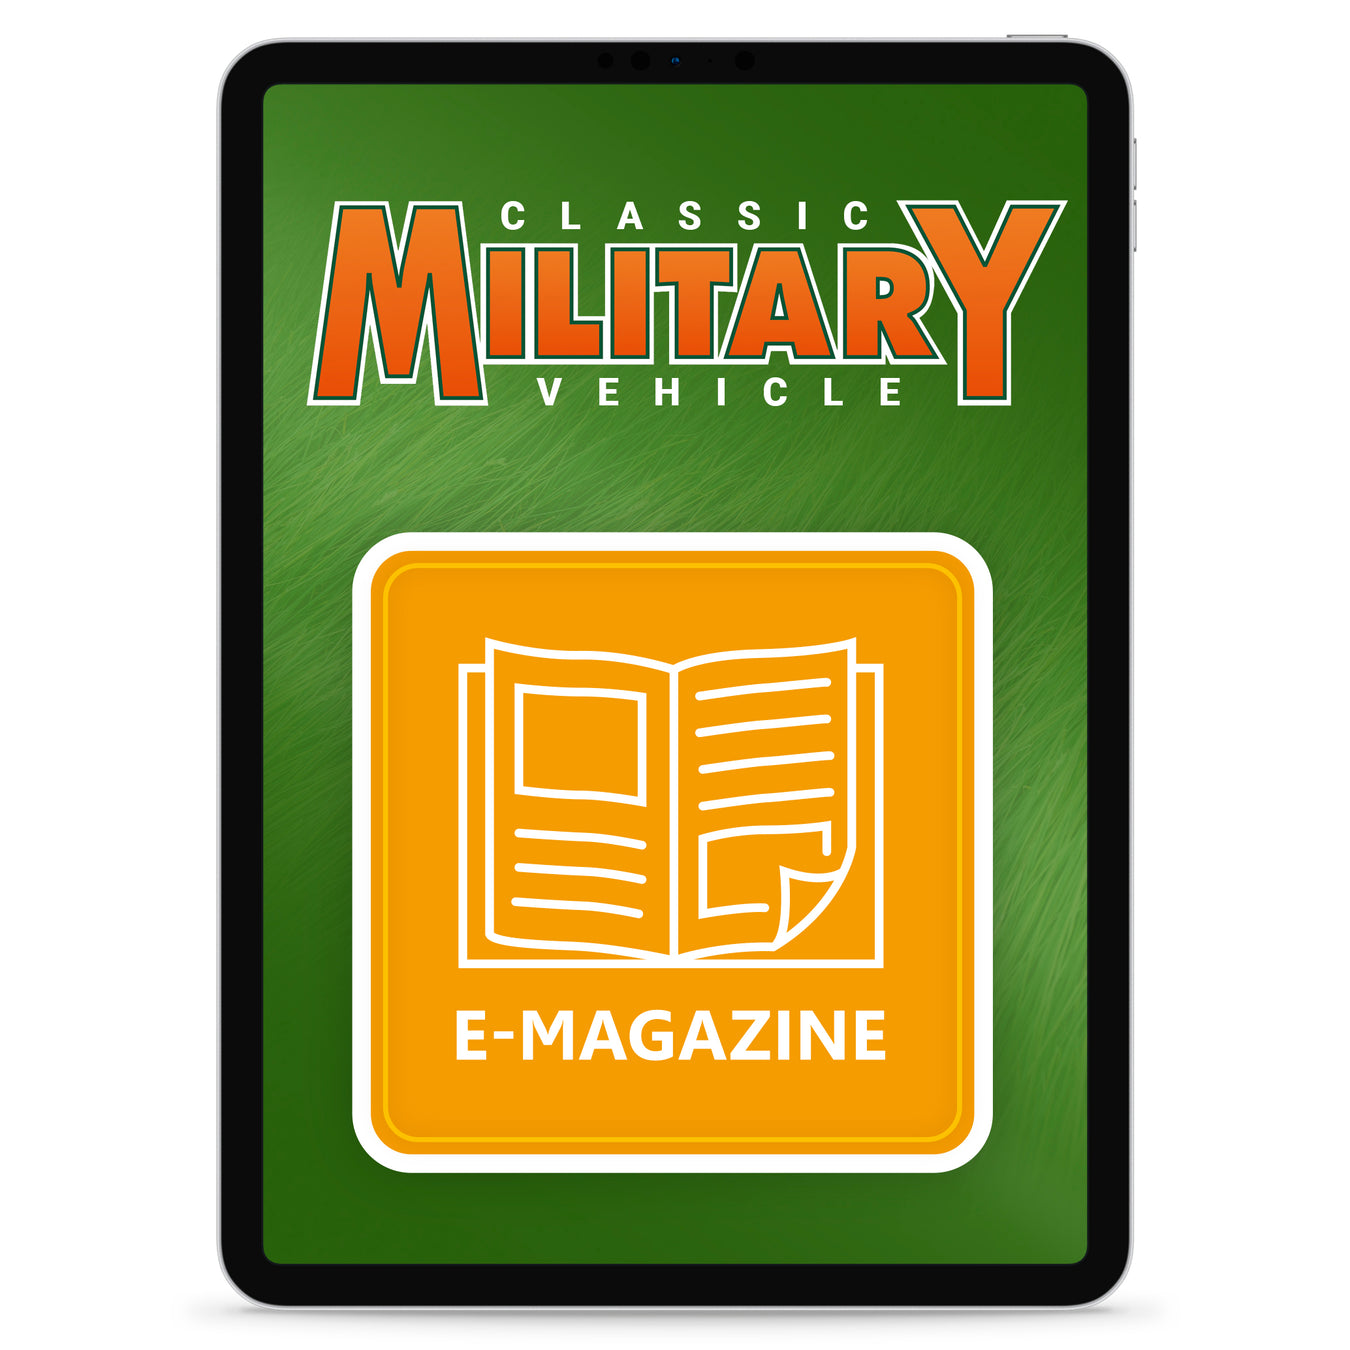 Classic Military Vehicle Magazine Subscription (E-Magazine)